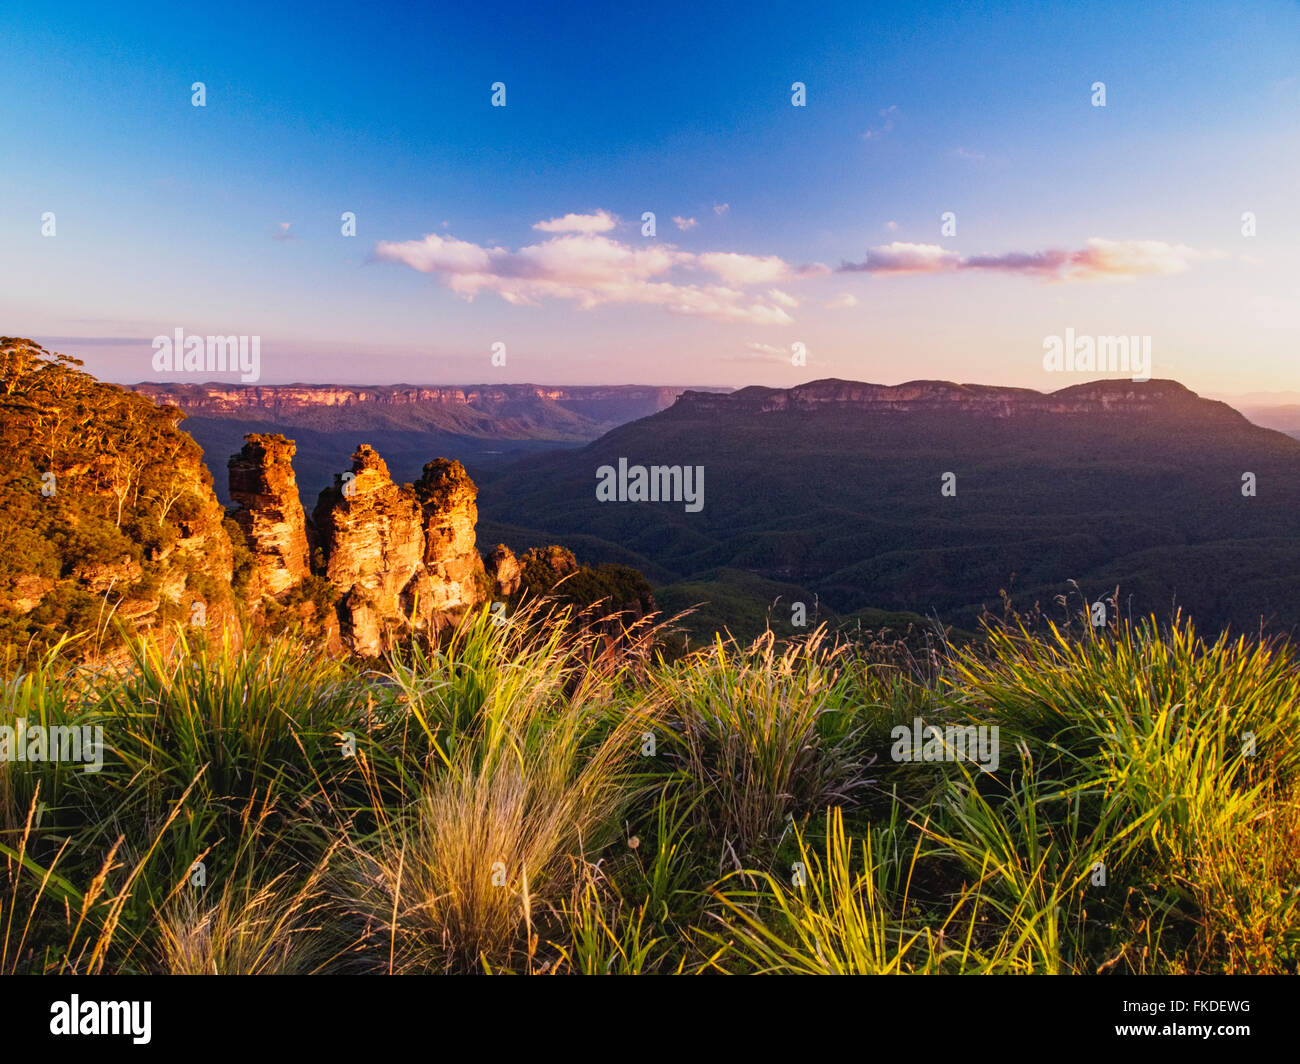 Scenic mountain landscape at sunset Stock Photo